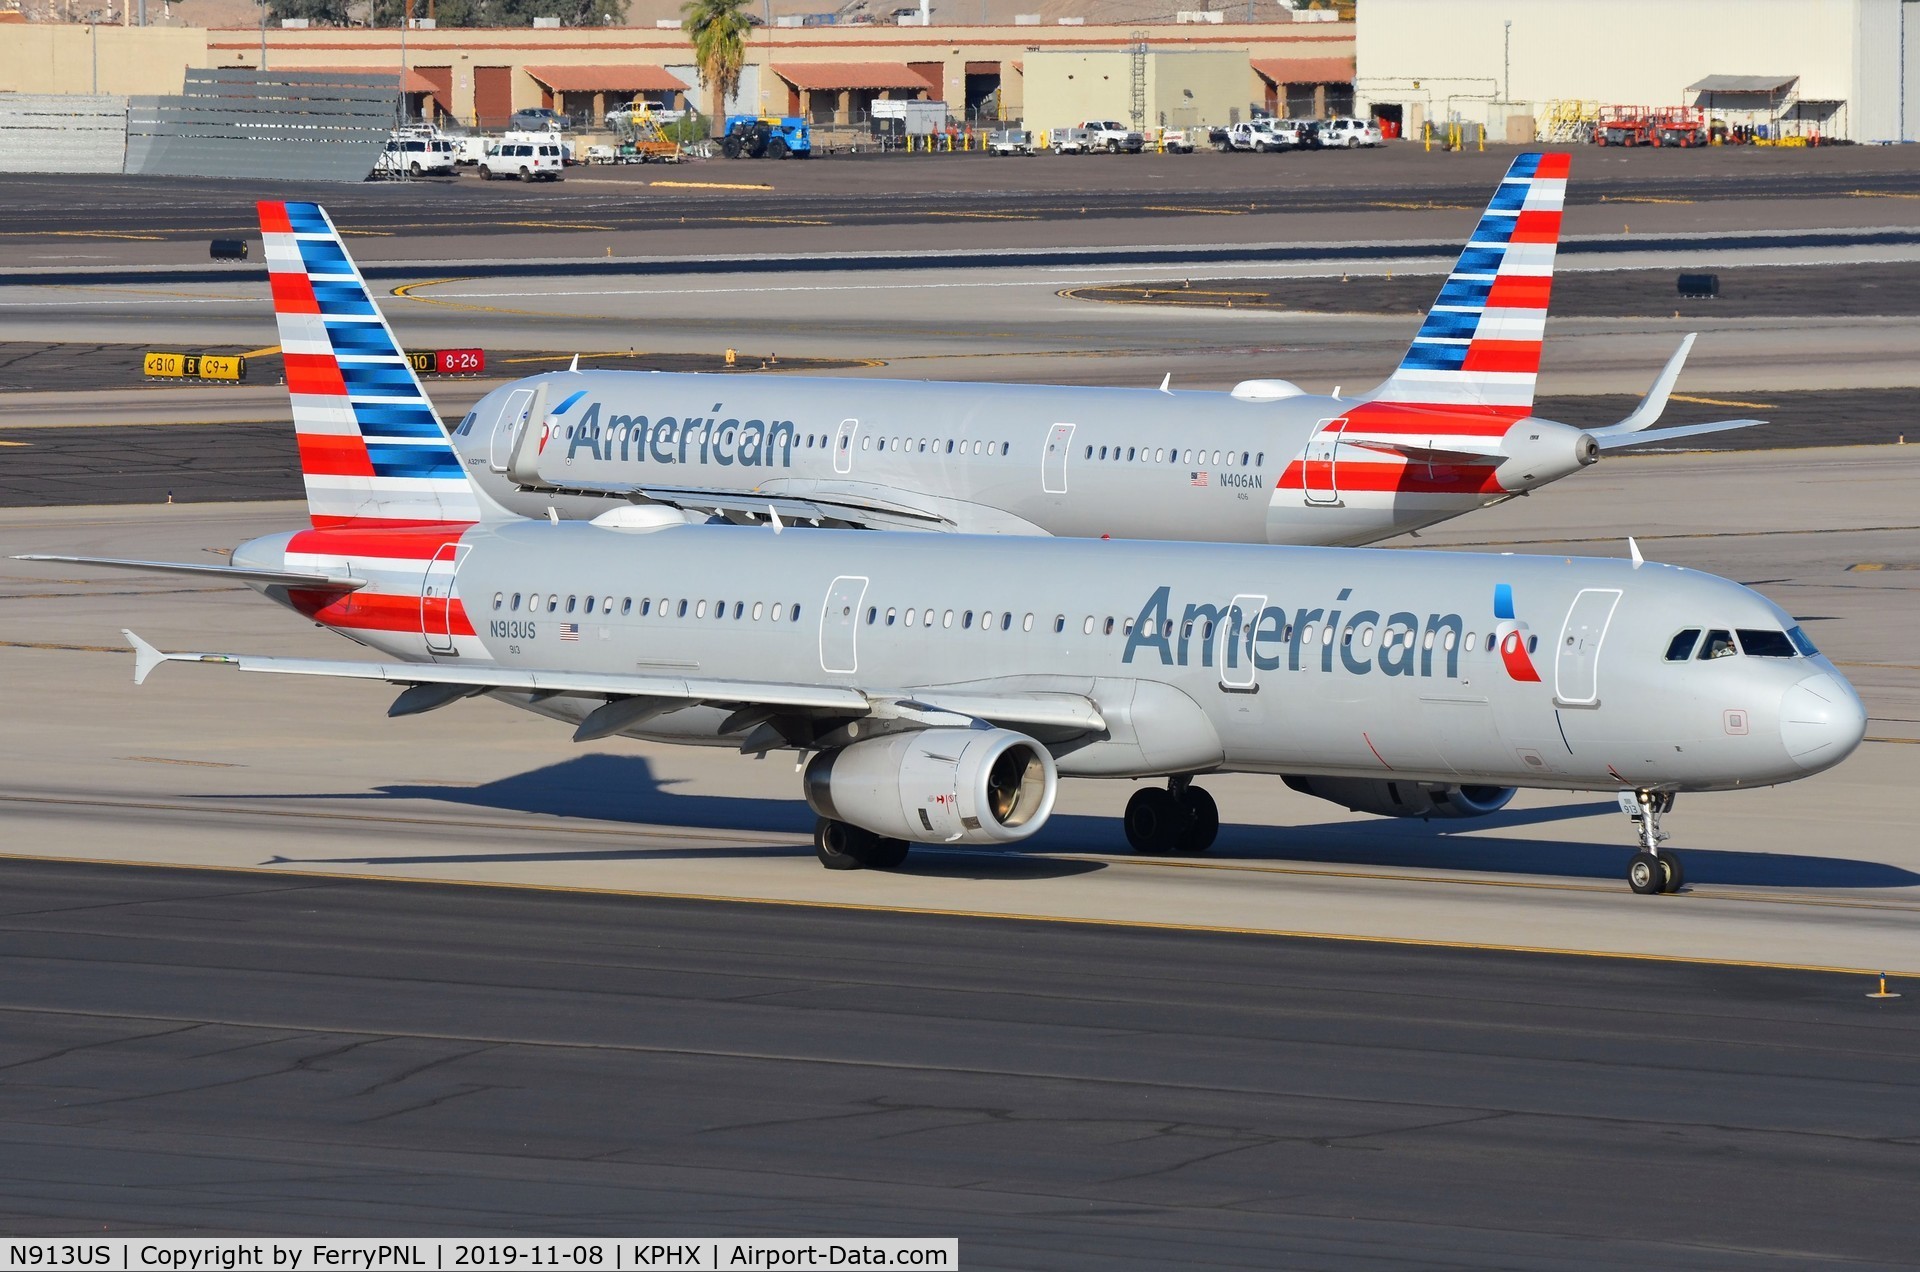 N913US, 2014 Airbus A321-231 C/N 6255, American A321 taxying